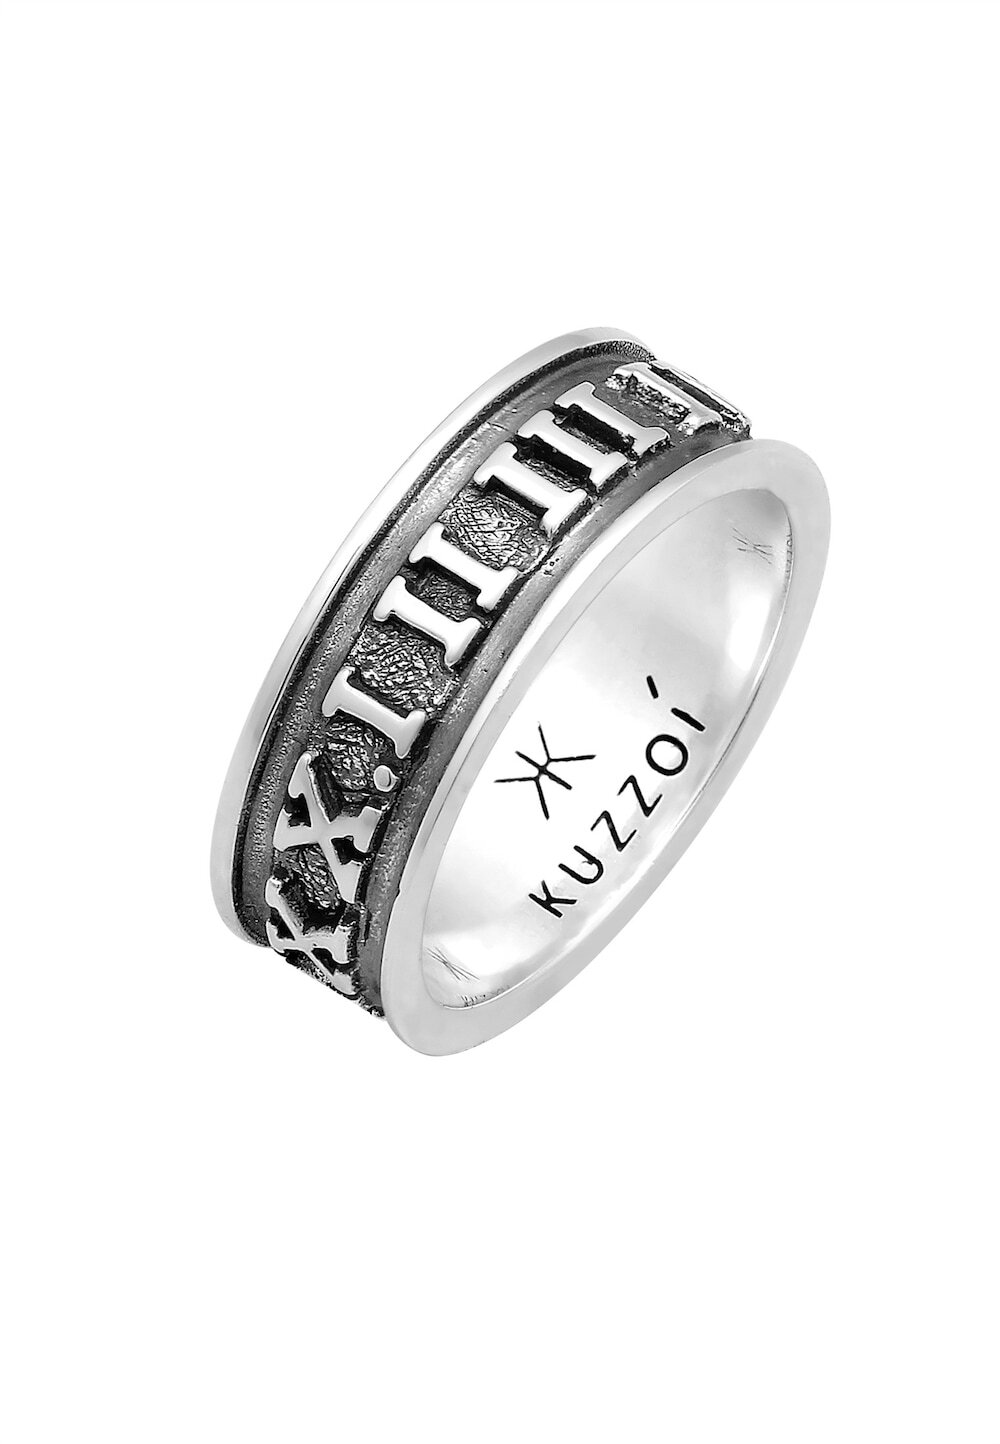 KUZZOI KUZZOI KUZZOI Ring Heren Band Ring Romeinse Cijfers Massief Trend Geoxideerd in 925 Sterling Zilver Mannen sieraden